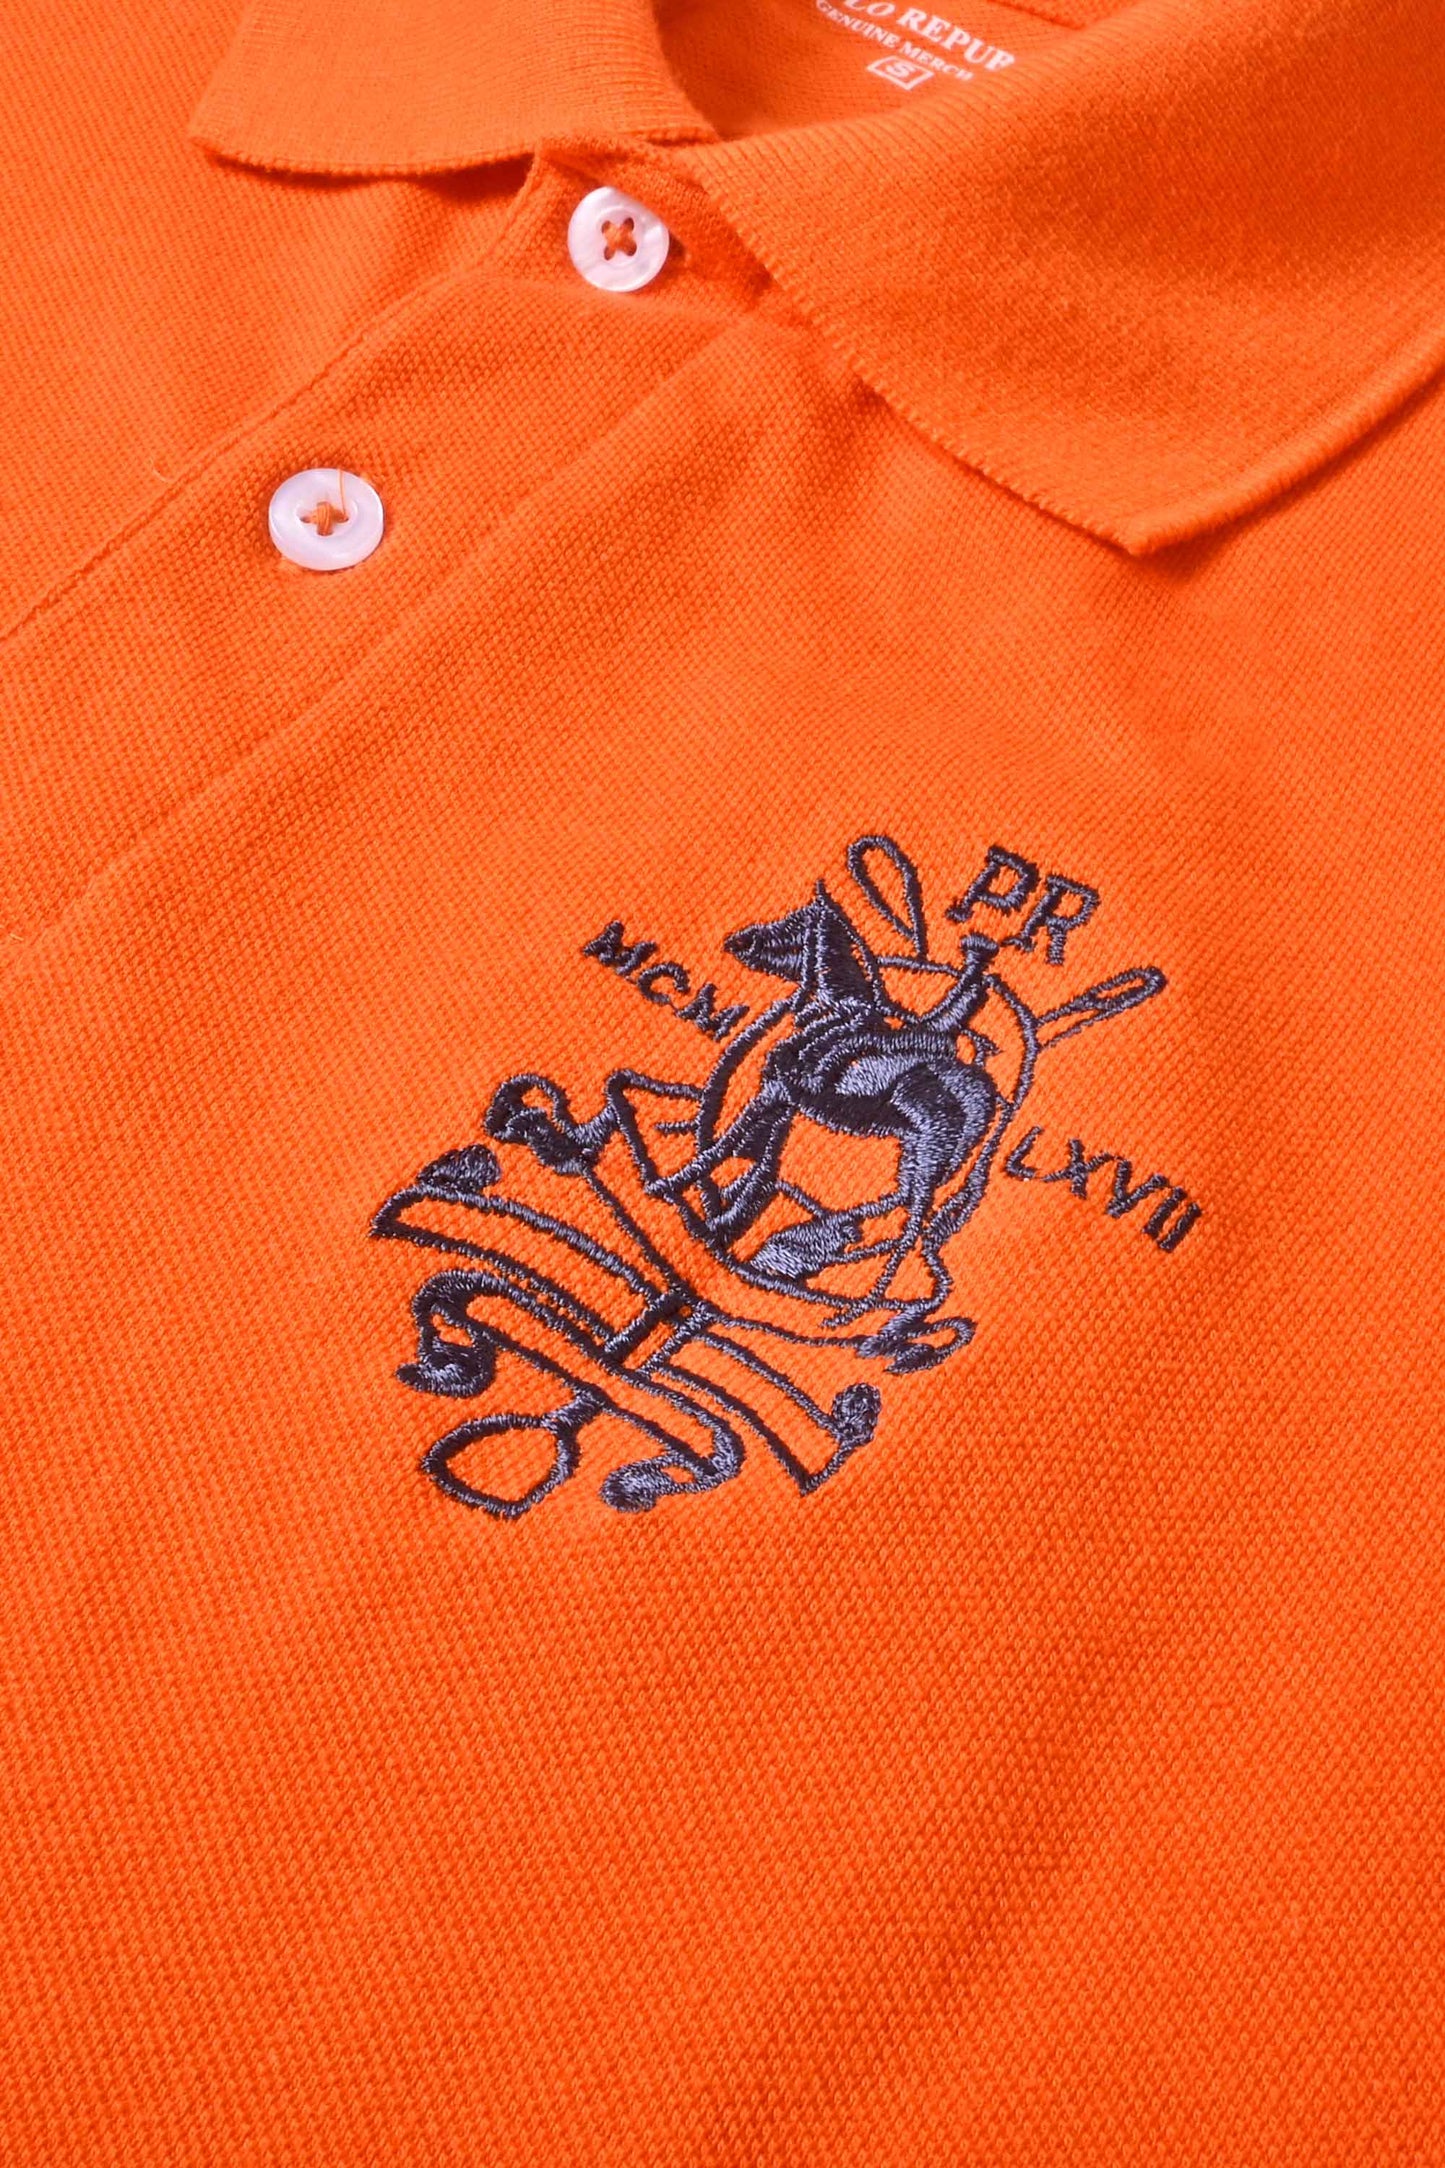 Polo Republica Men's Pony Polo Crest & 8 Embroidered Short Sleeve Polo Shirt Men's Polo Shirt Polo Republica 